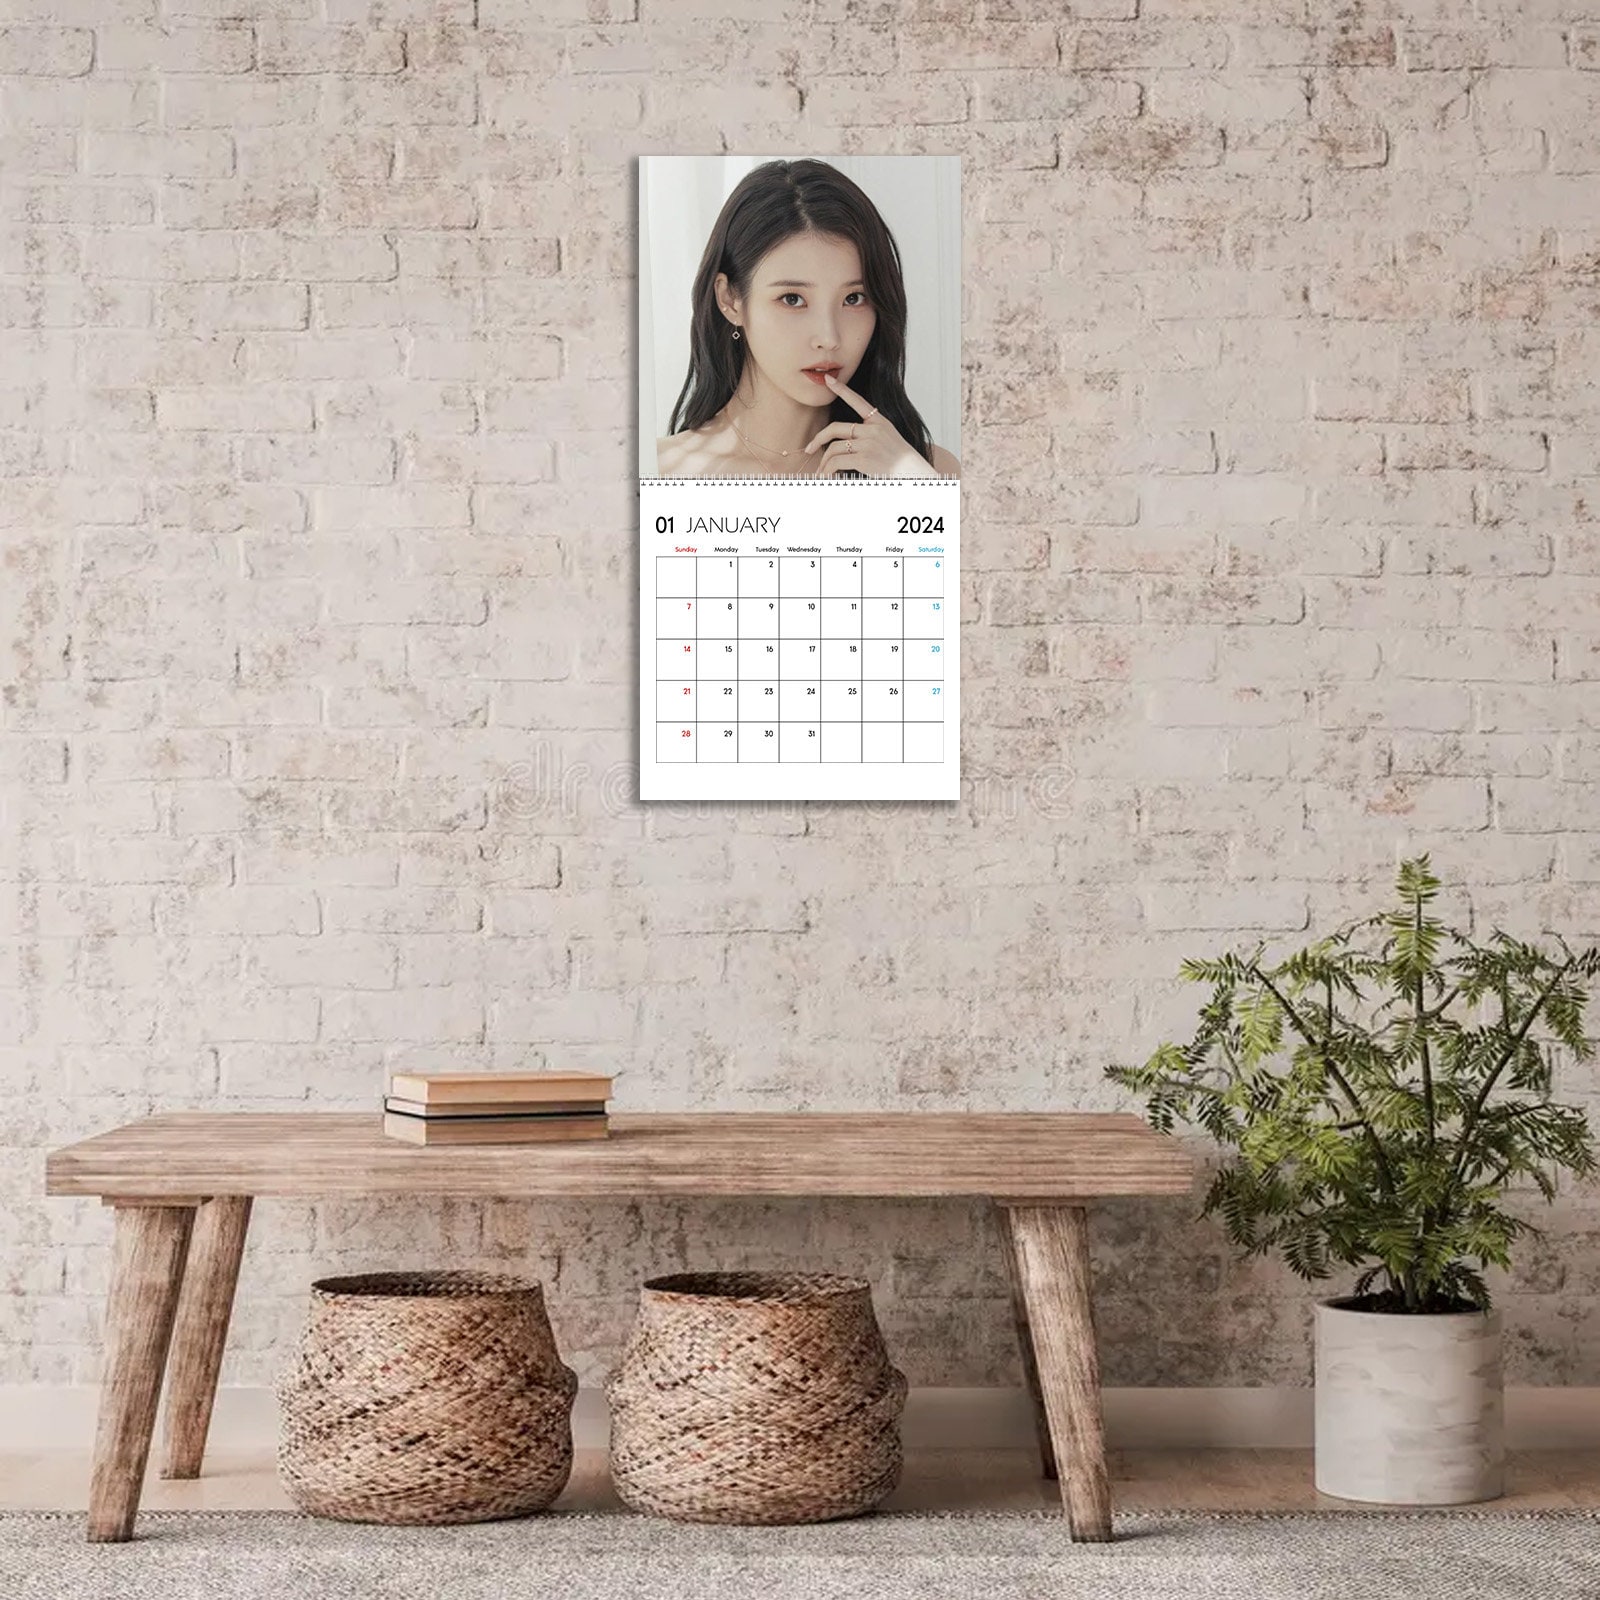 IU Calendar 2024, Celebrity Calendar, IU 2024 Wall Calendar sold by